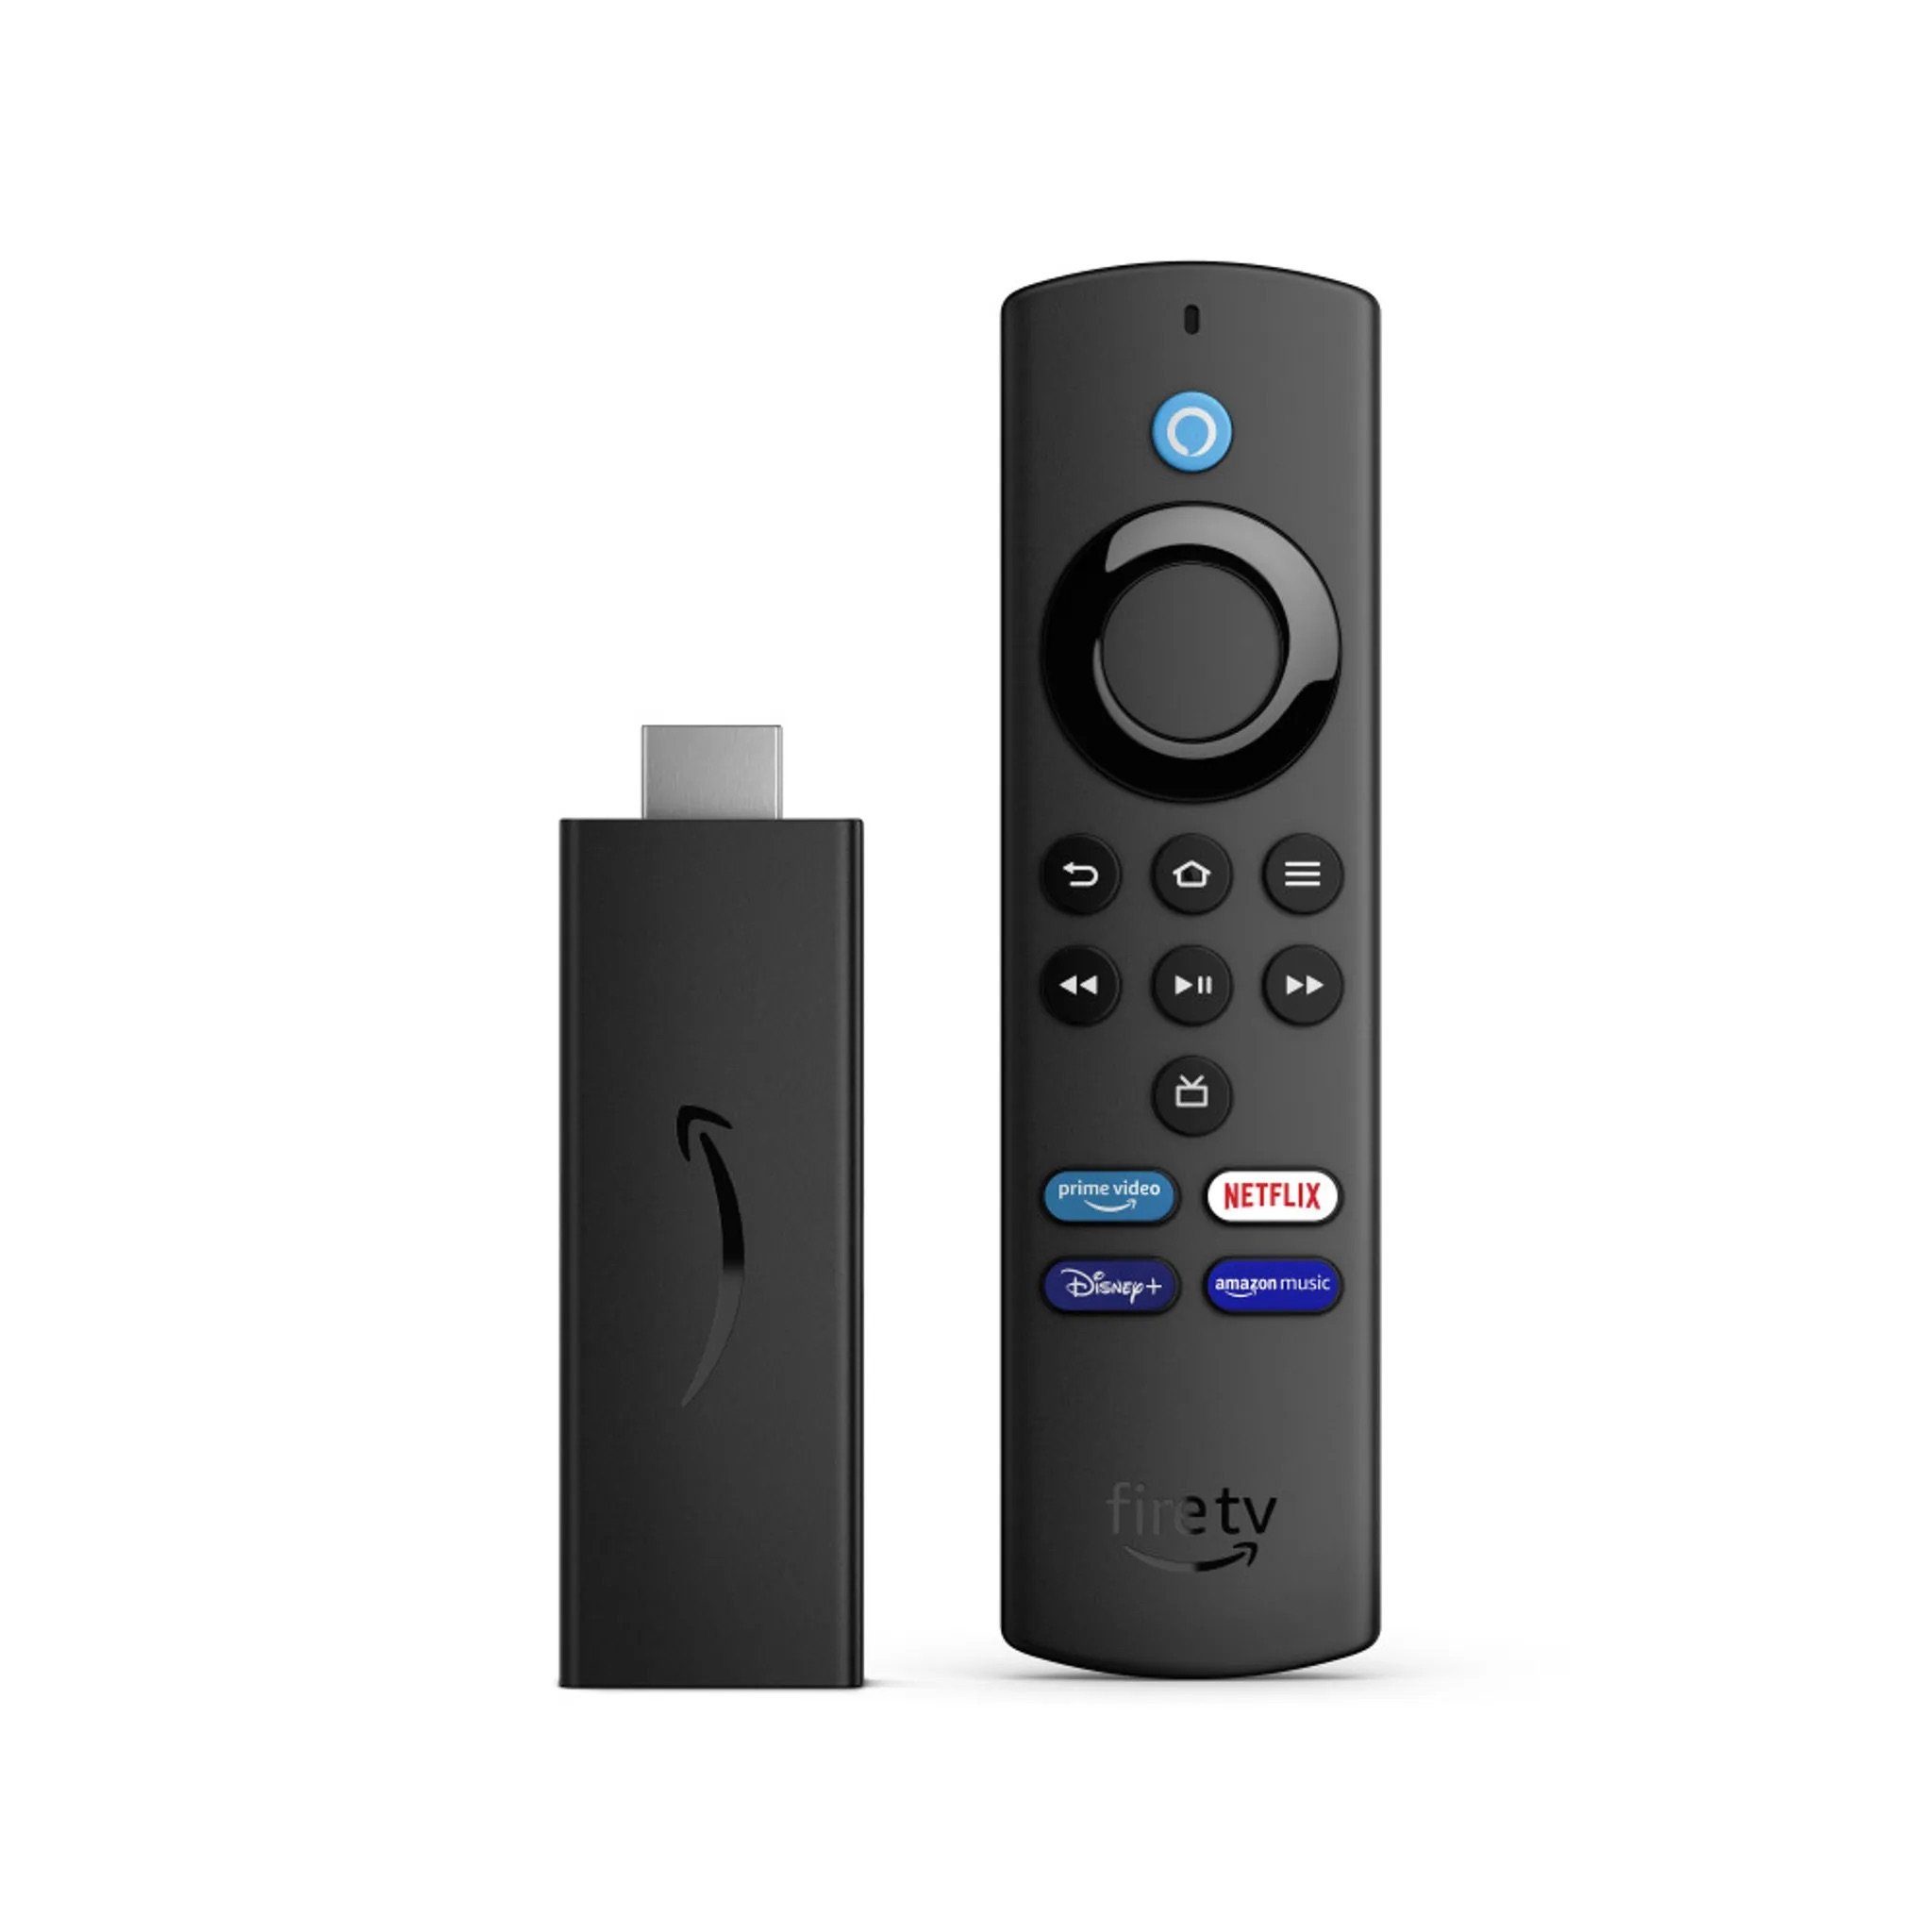 Stick mit« Amazon Amazon Stick Streaming-Box Streaming Smart-Home-Fernbedienung LITE TV Fire »Amazon